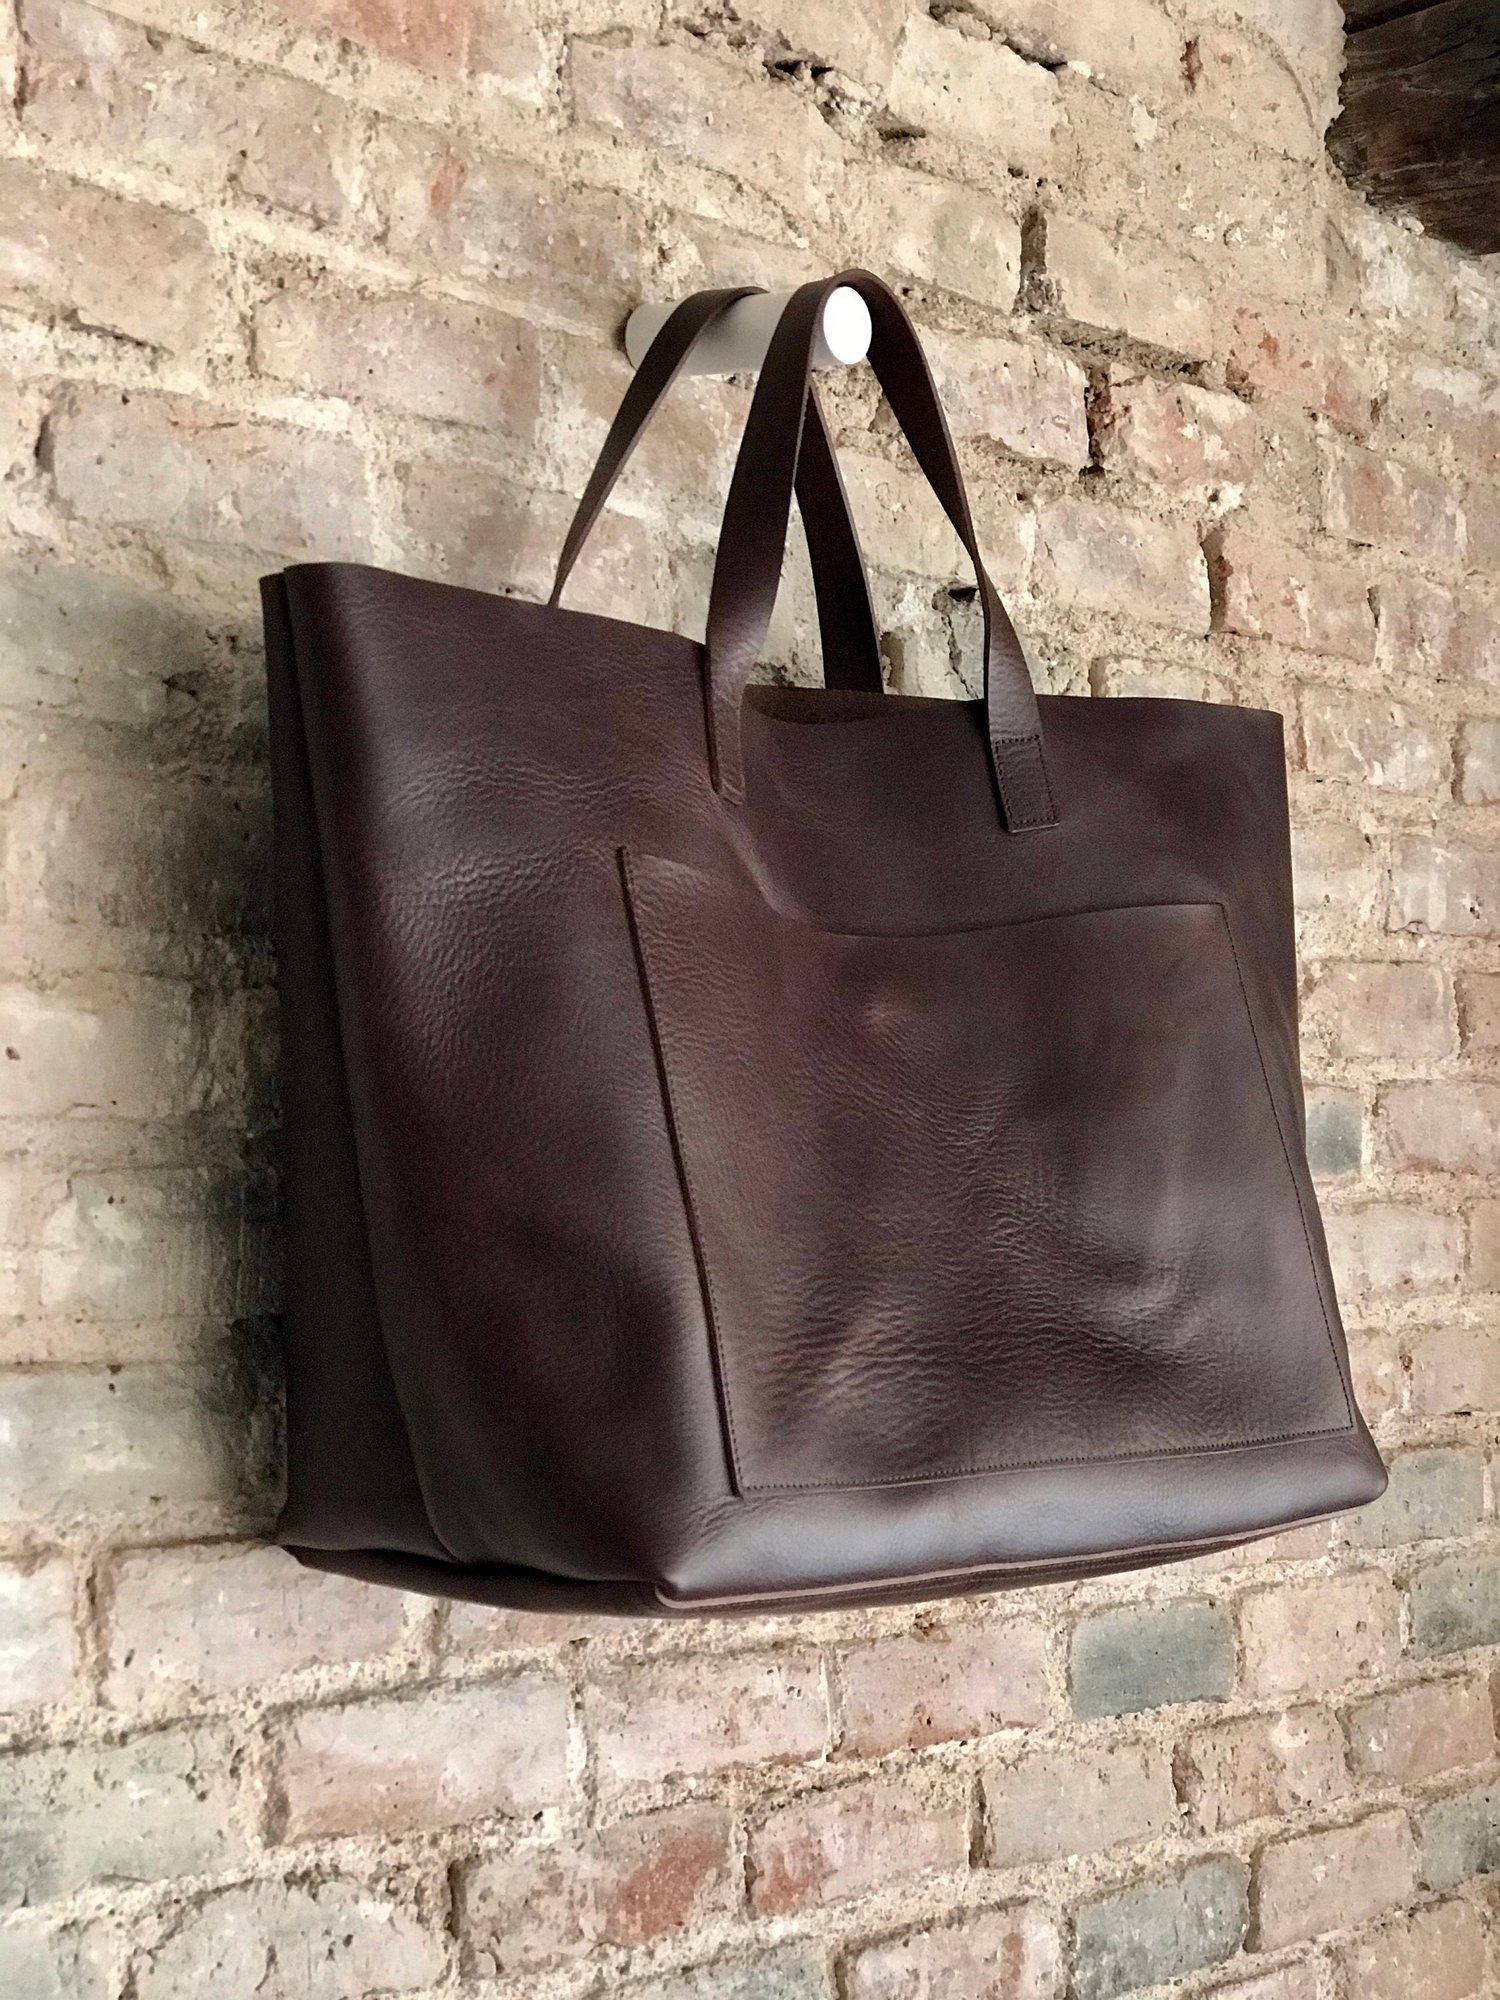 Brown Tote : r/handbags